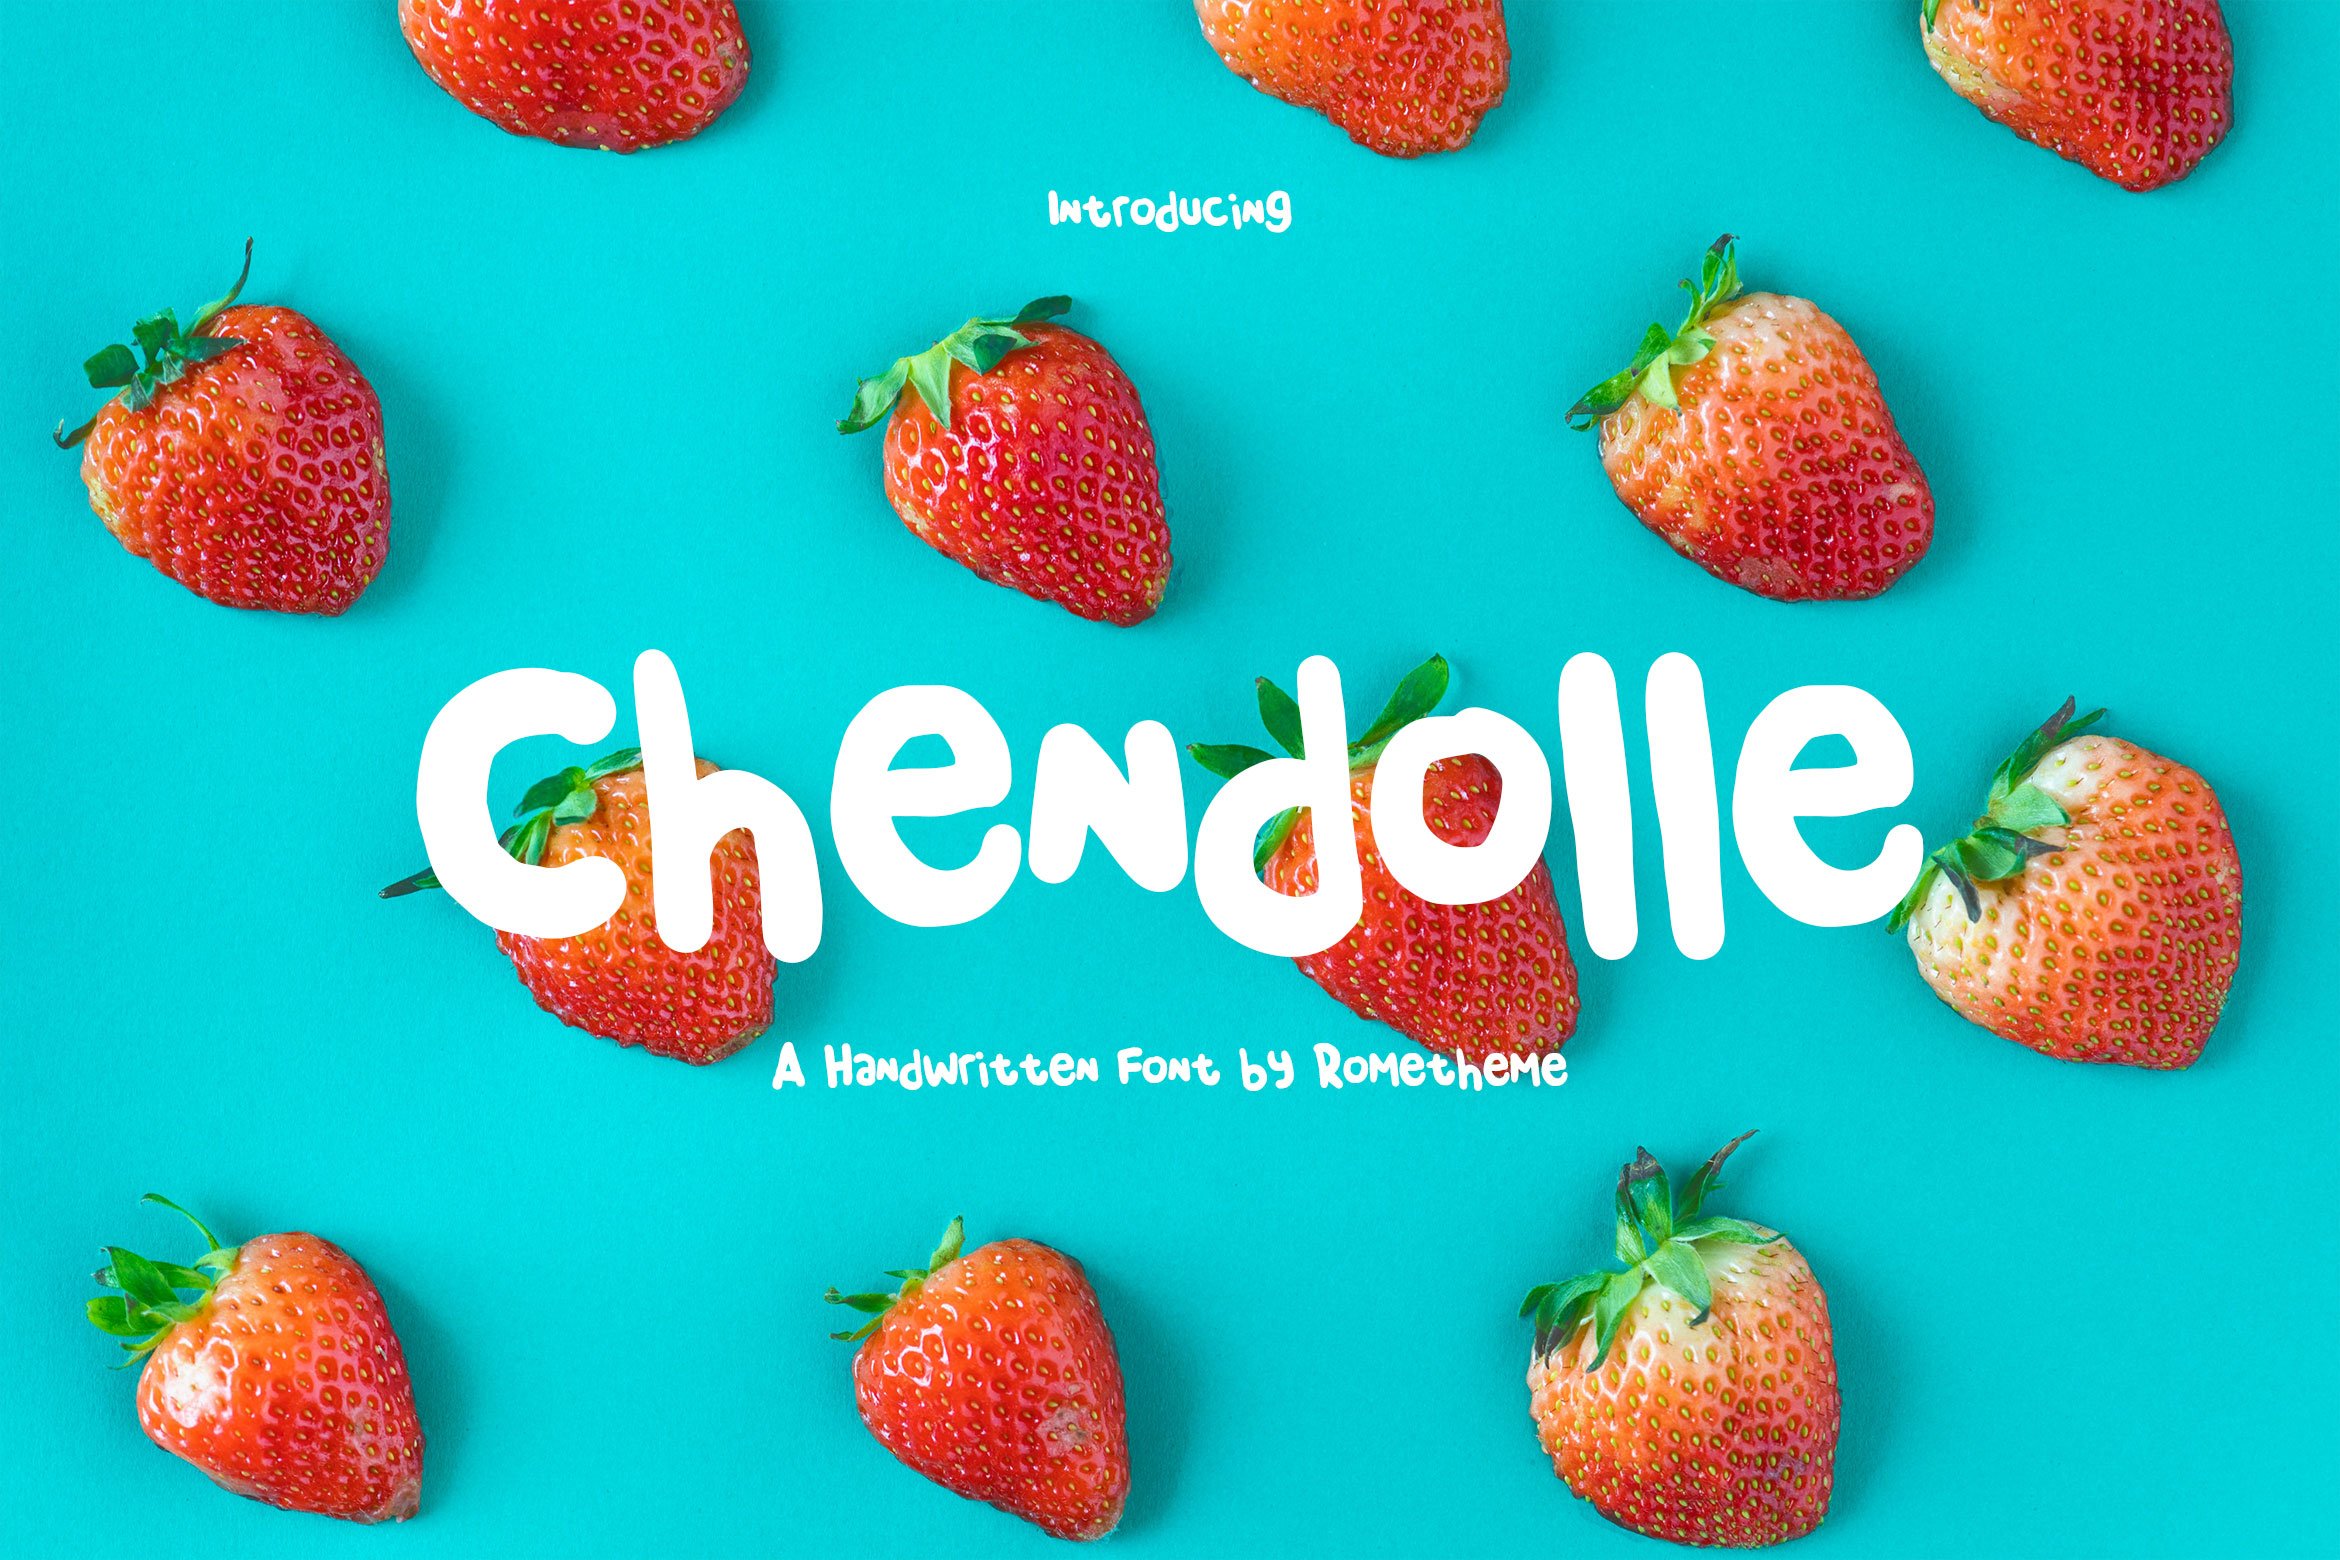 Chendolle - Fun Handwritten Font cover image.